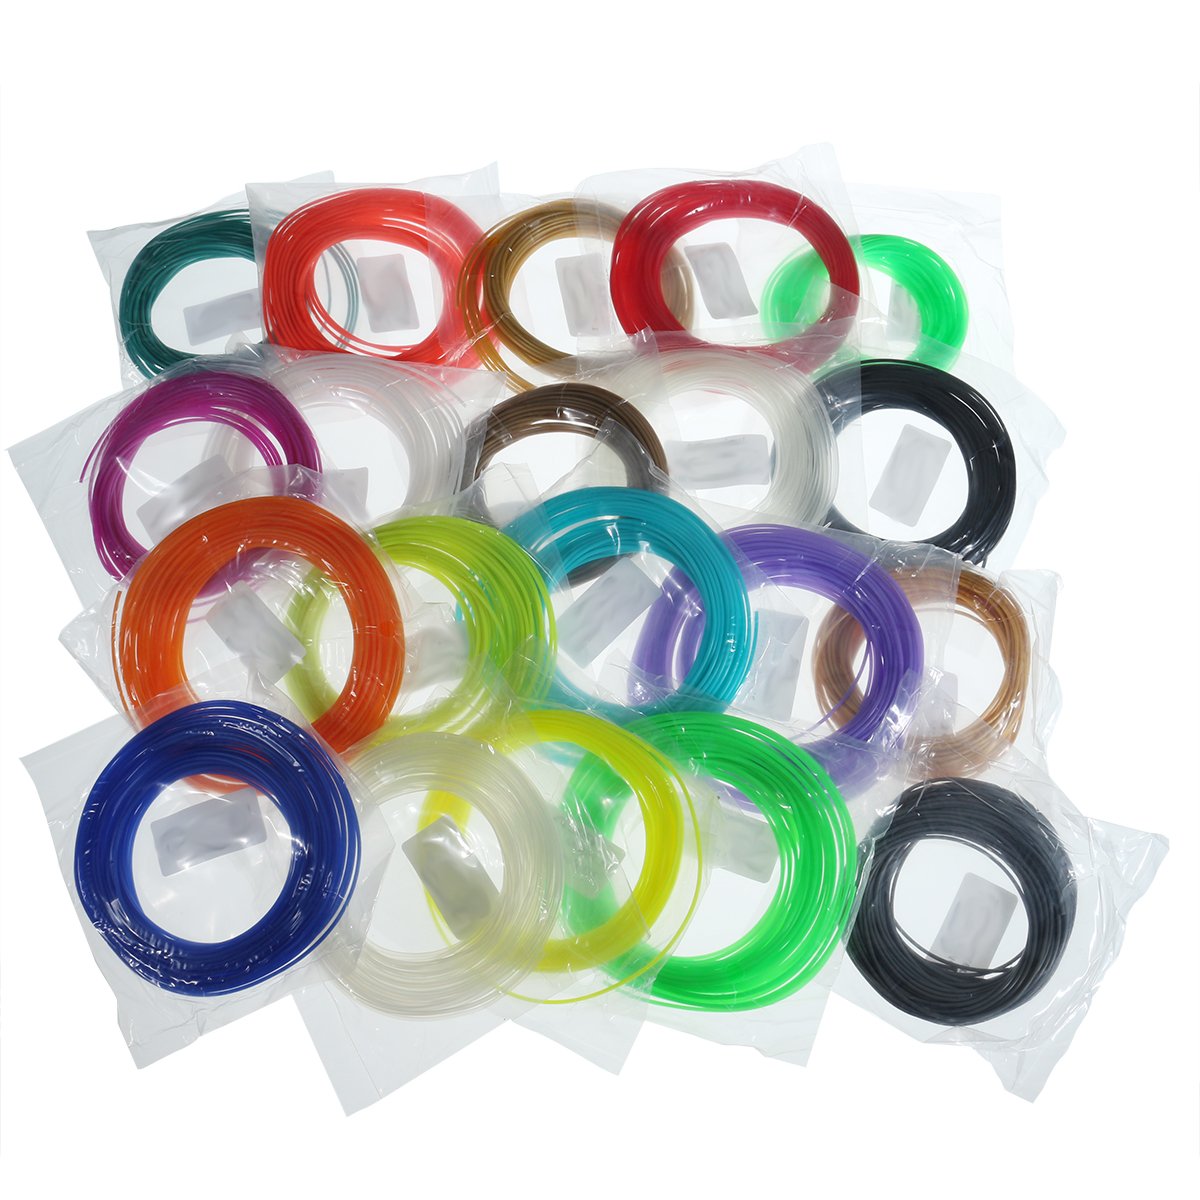 20 Colors/Pack 5/10m Length Per Color PLA 1.75mm Filament for 3D Printing Pen 0.4mm Nozzle 1